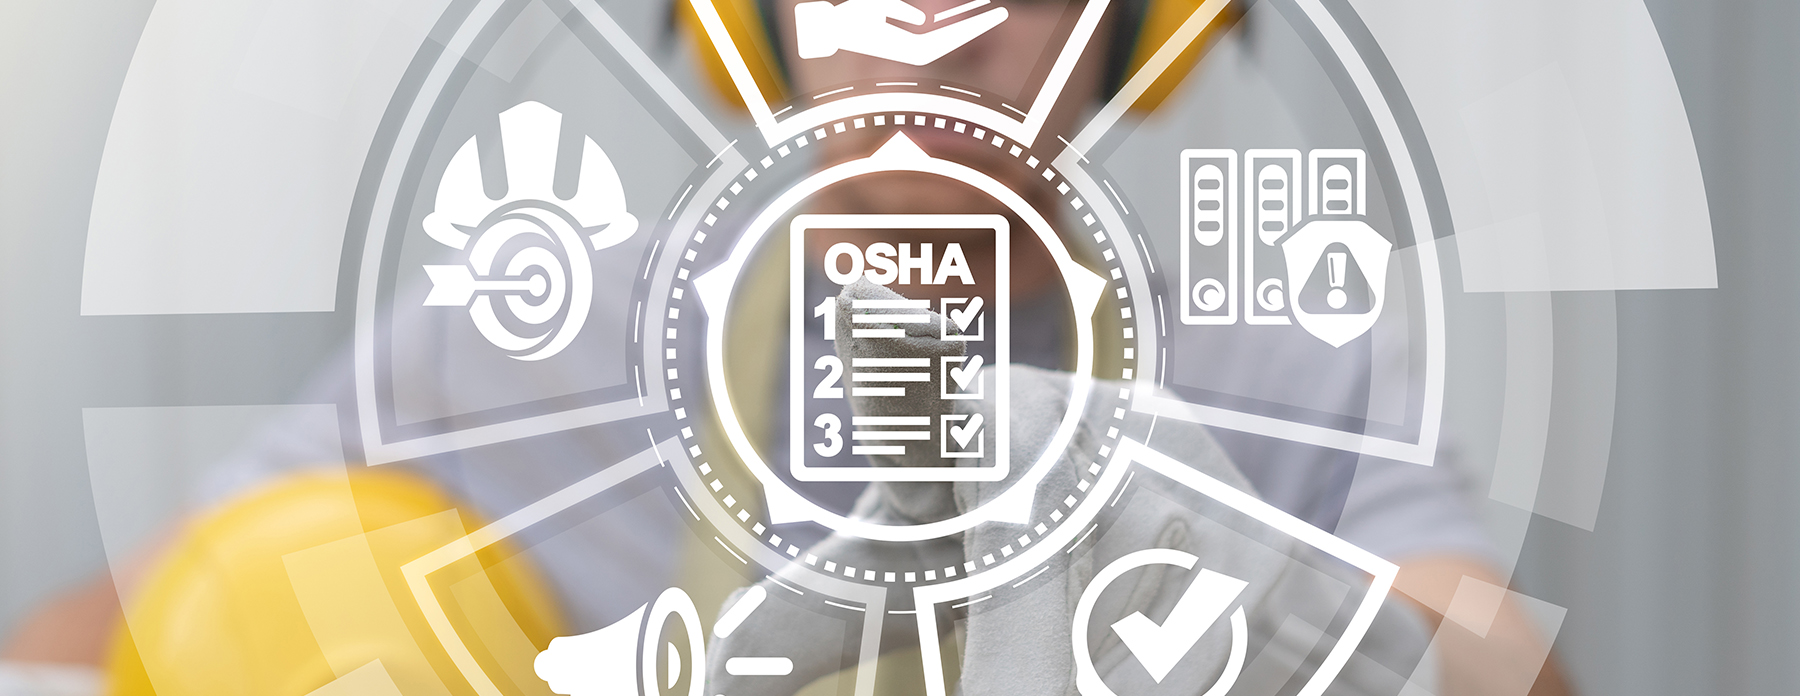 OSHA 10-hour